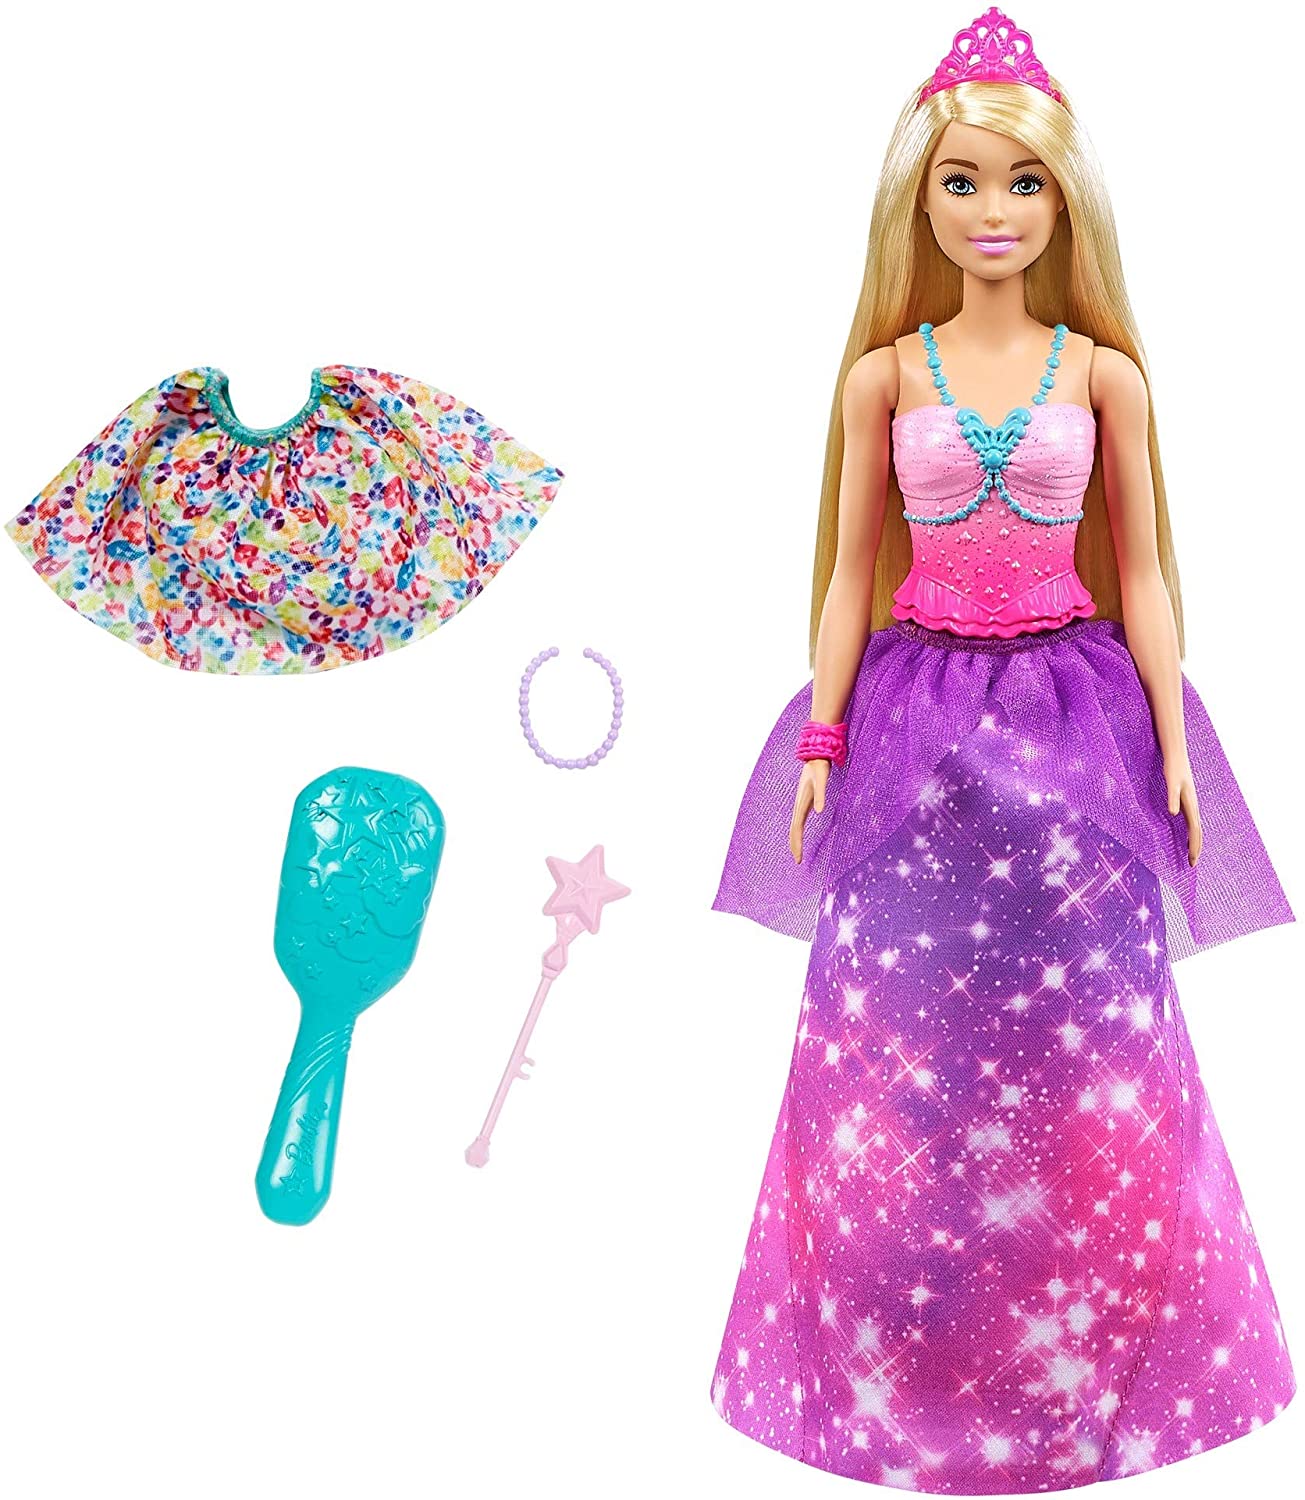 Barbie - Dreamtopia - 2-in-1 Doll - Princess (GTF92)